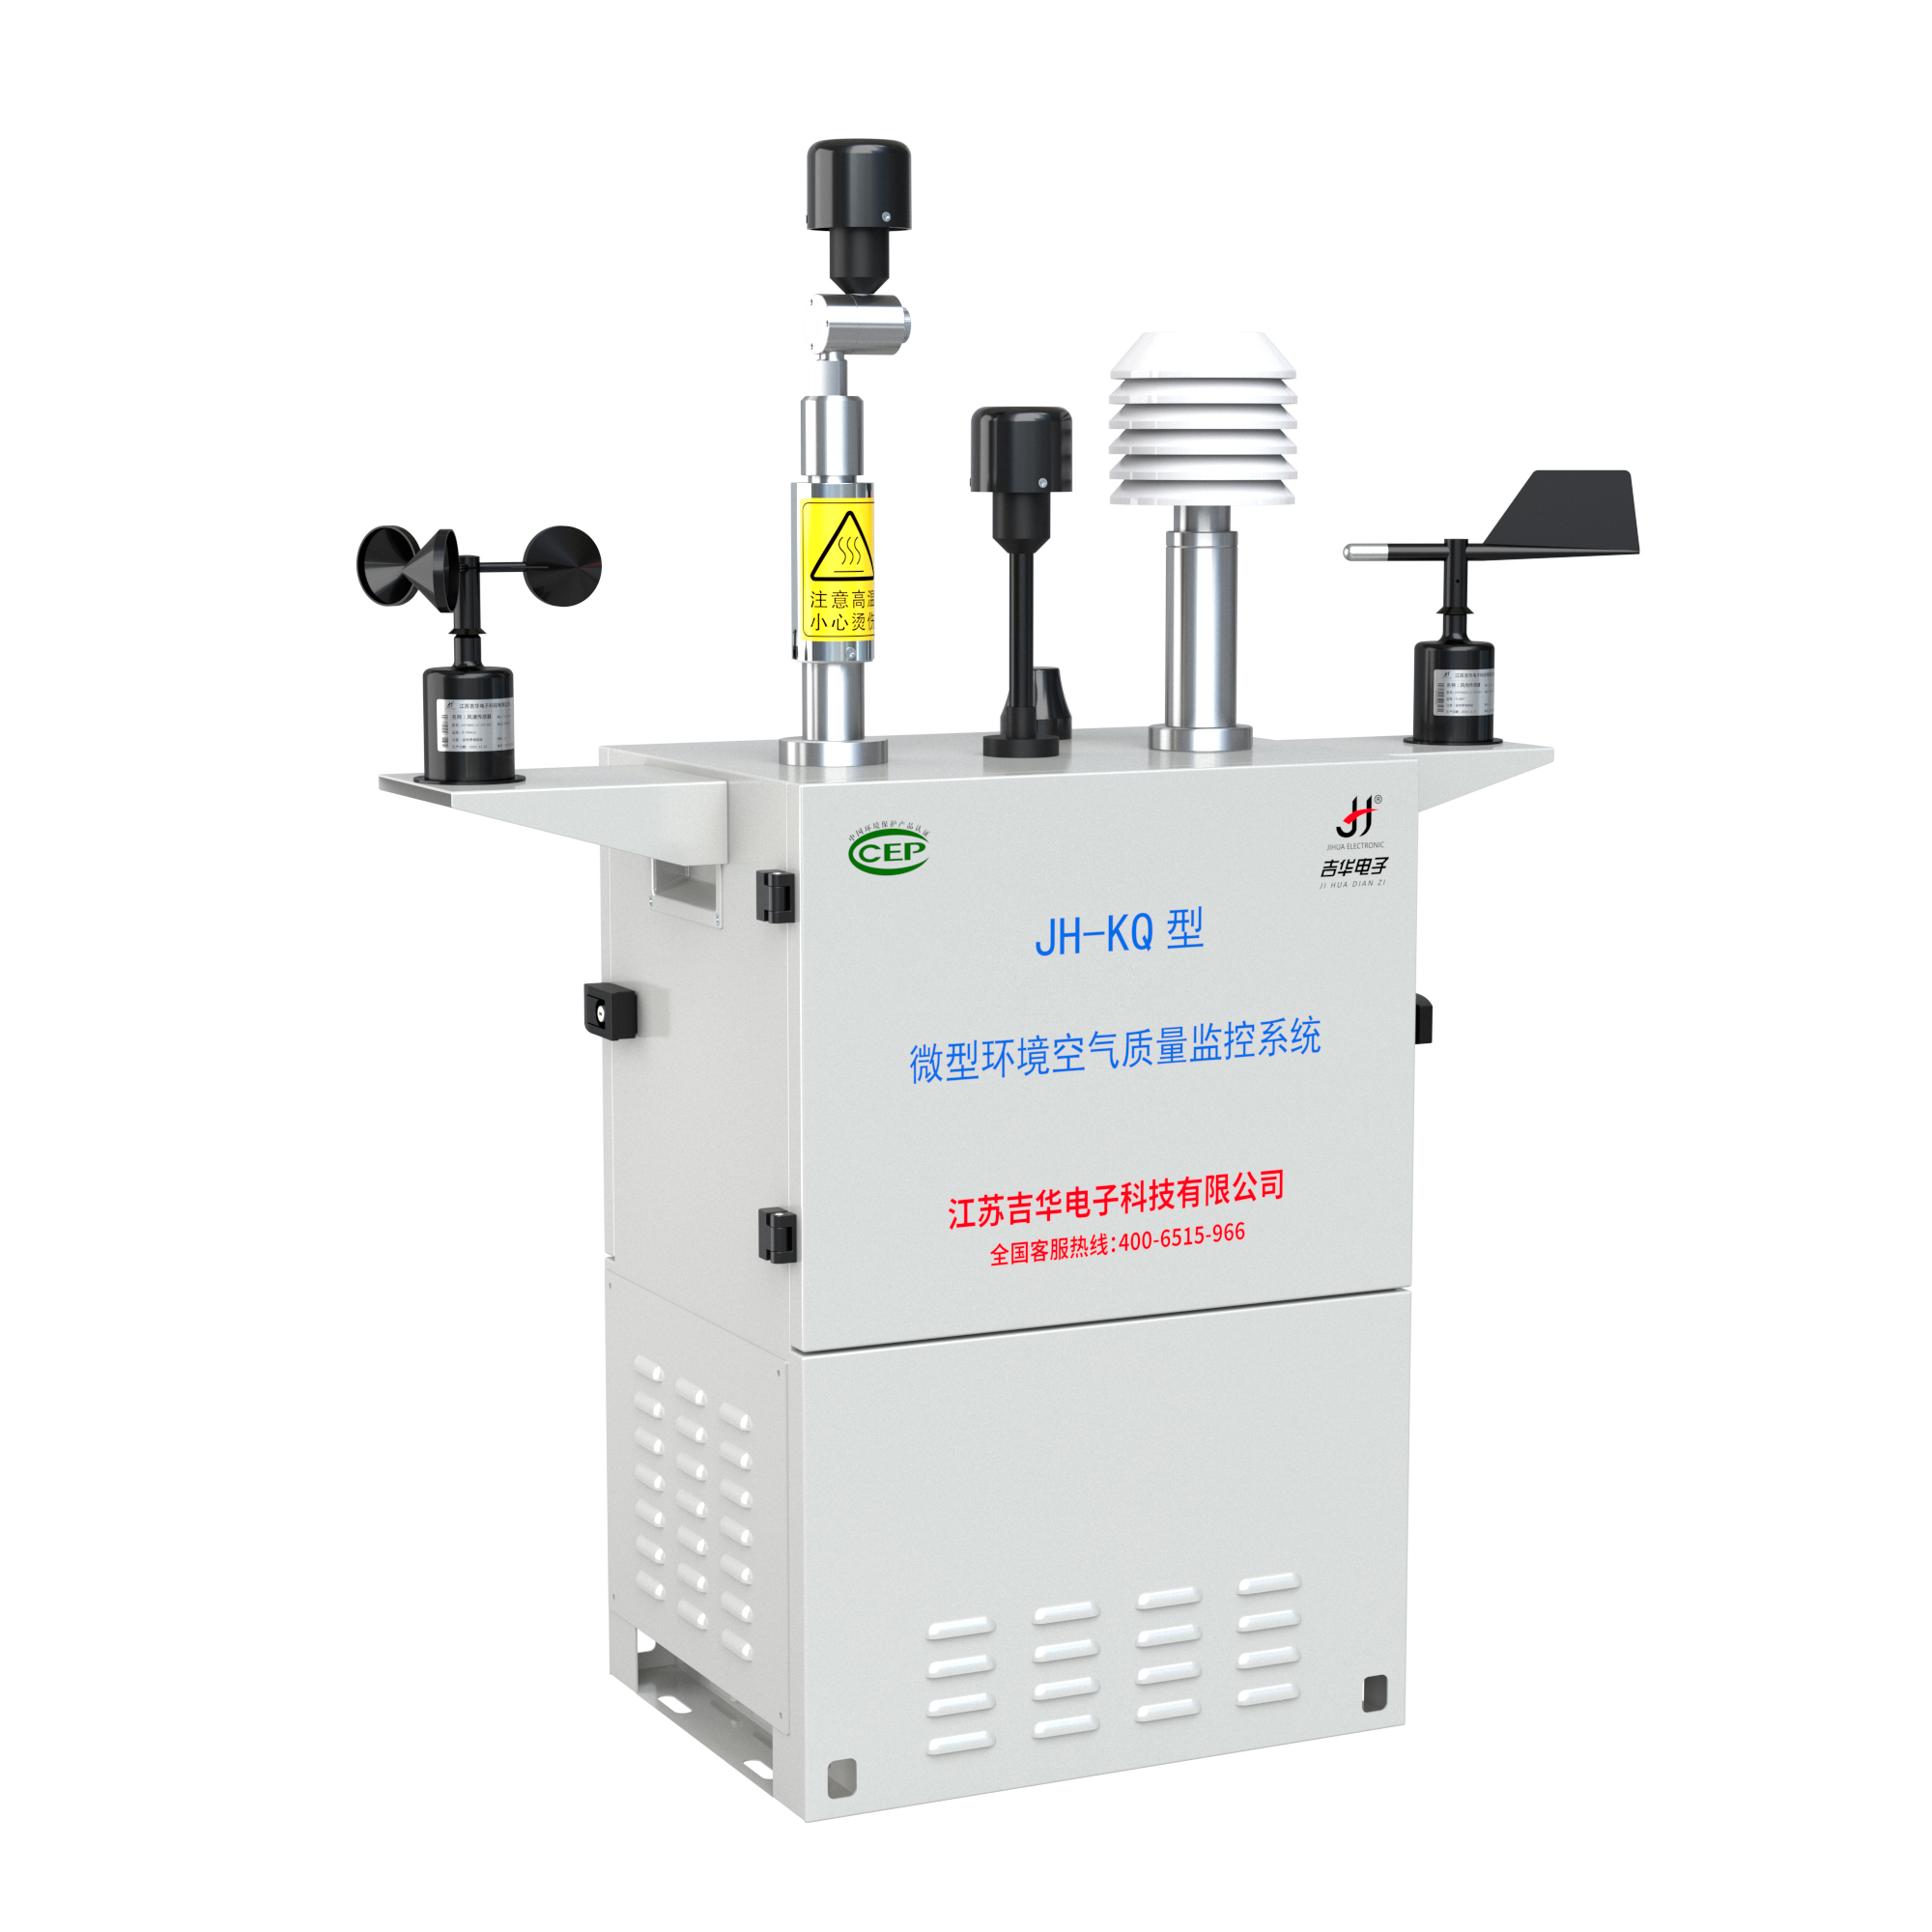 JH-KQ型 微型環境空氣質量監控系統（空調型）